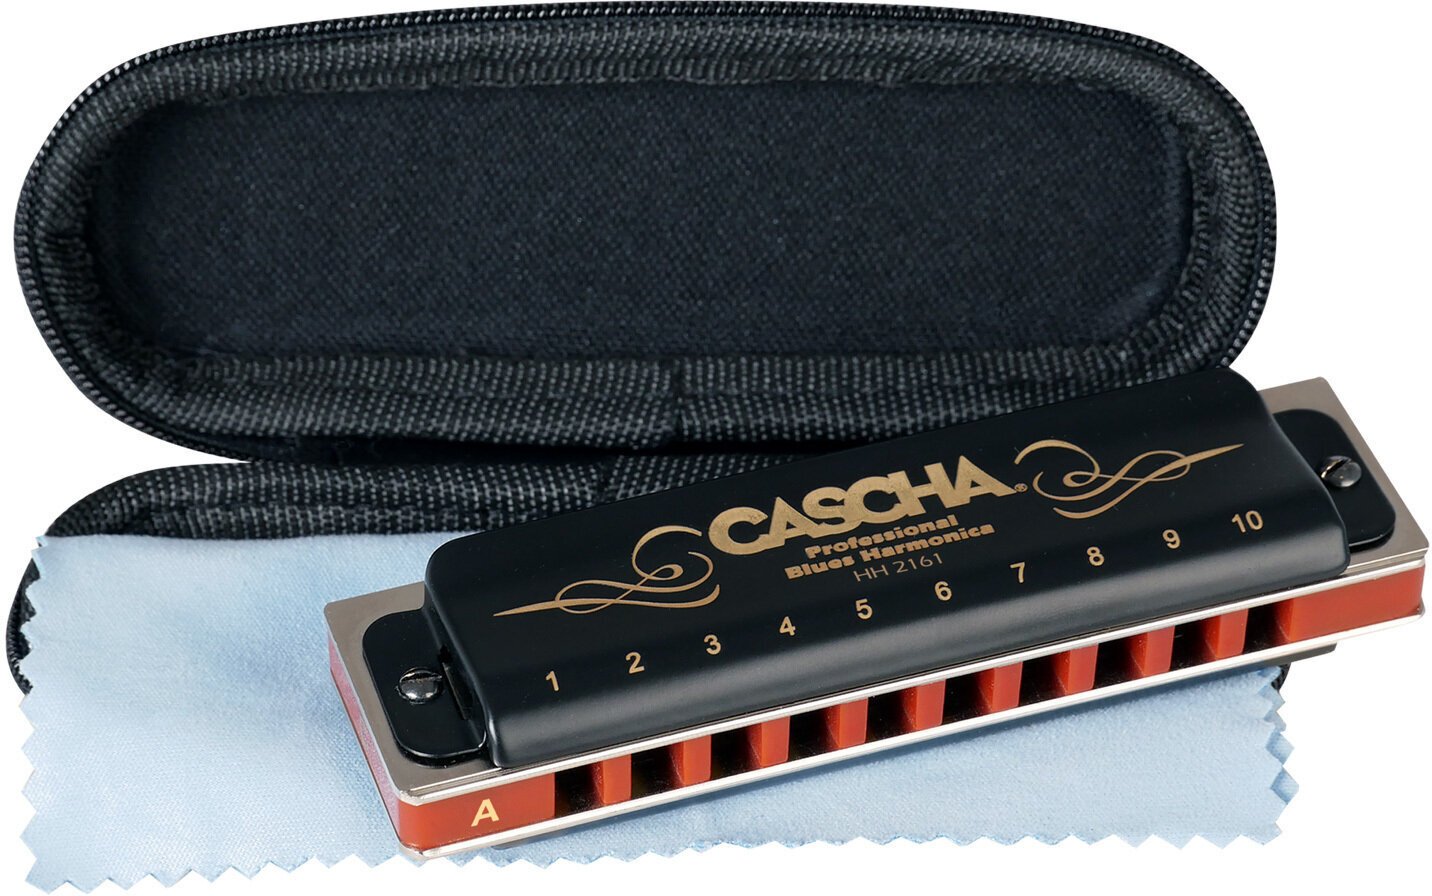 Diatonic harmonica Cascha HH 2161 Professional Blues A